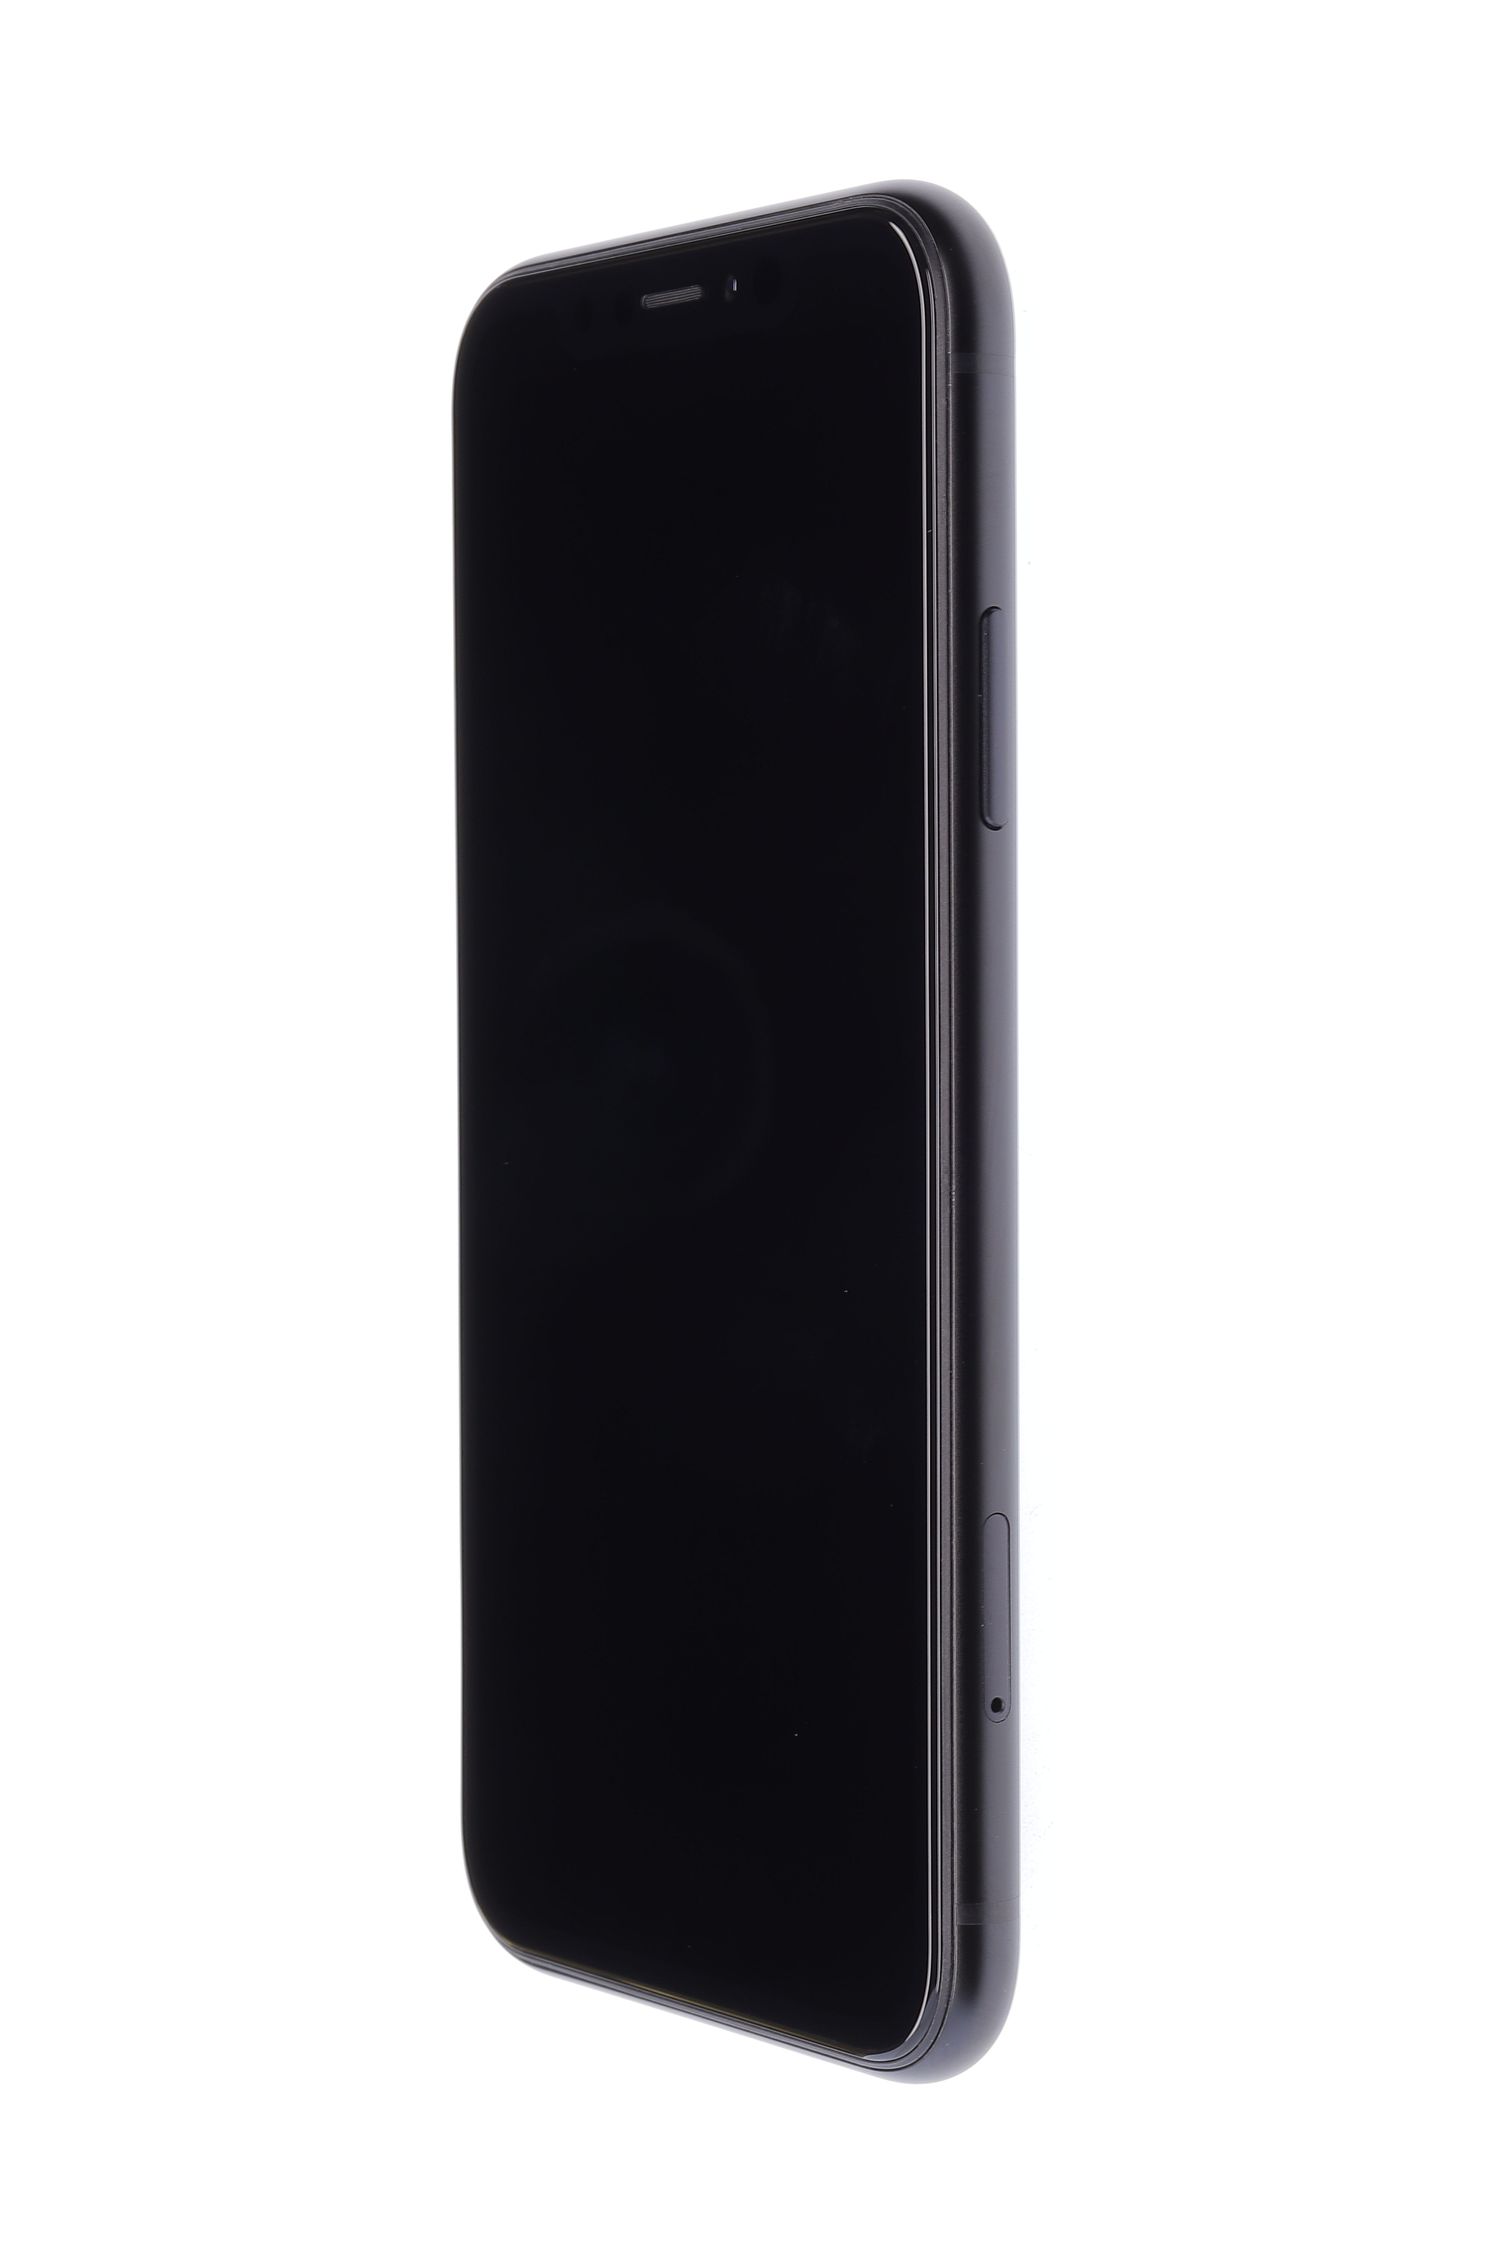 Telefon mobil Apple iPhone XR, Black, 256 GB, Excelent